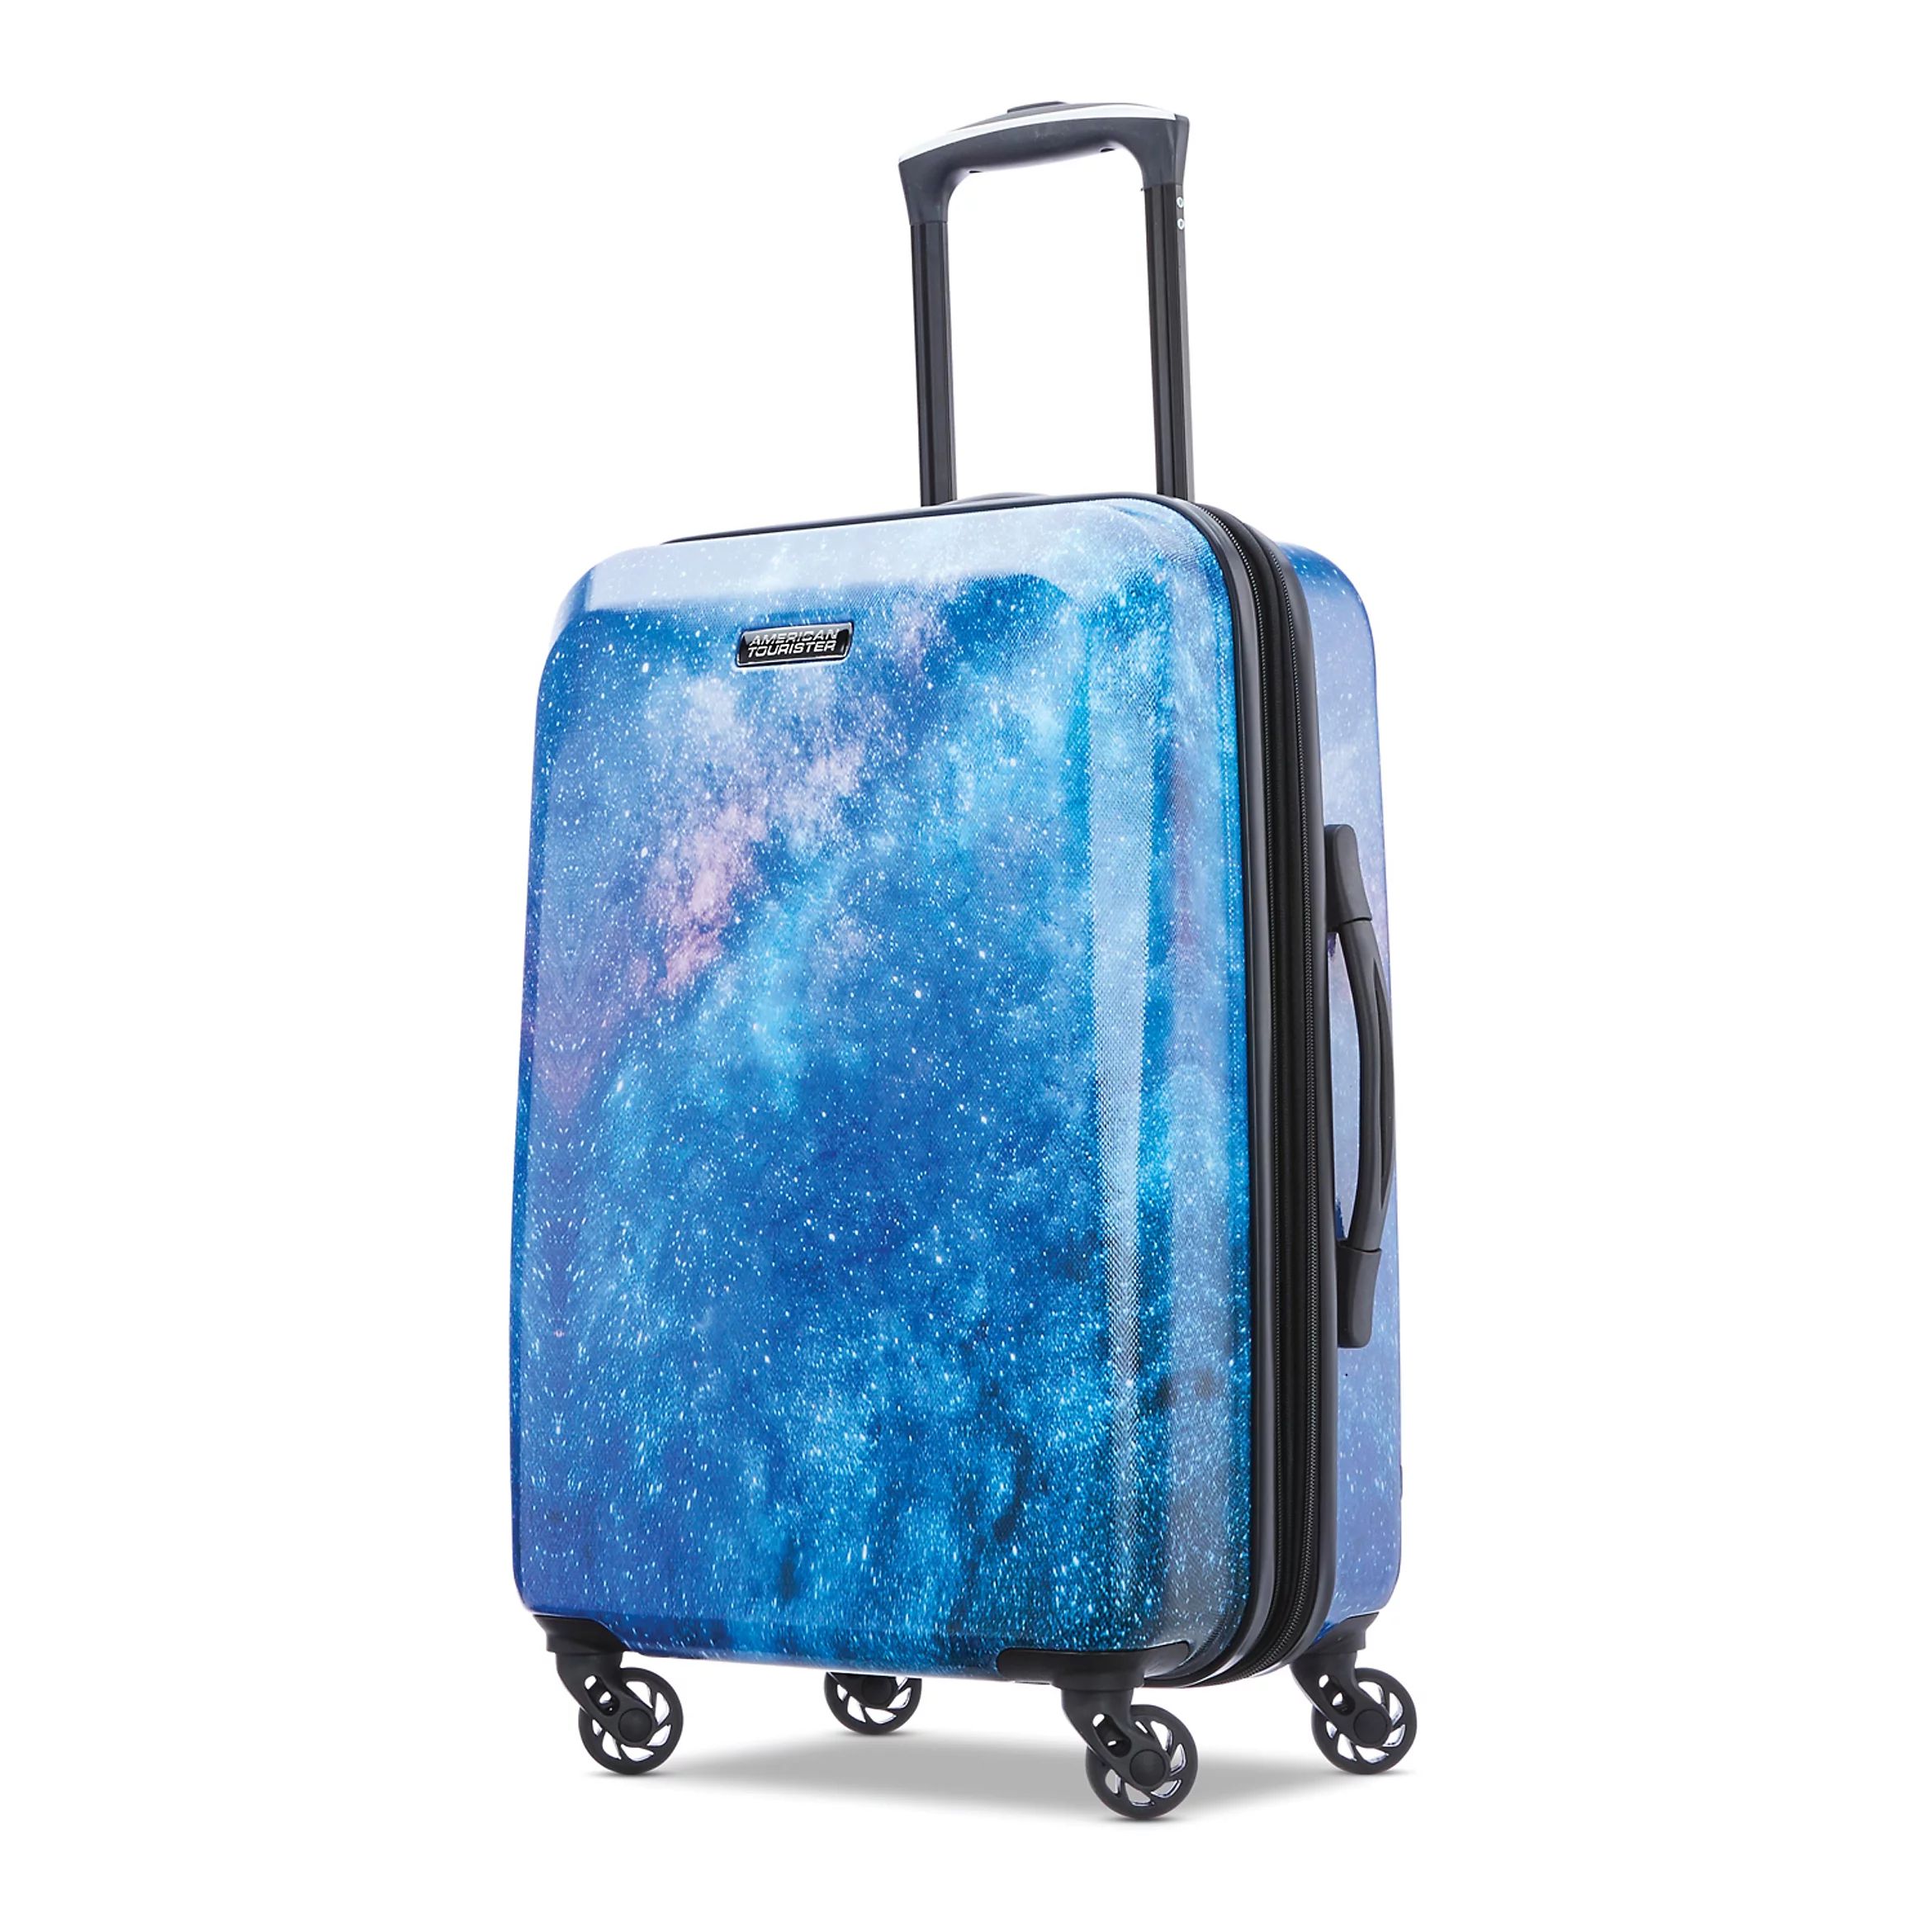 American Tourister Burst Max Printed Hardside Spinner Luggage | Kohl's